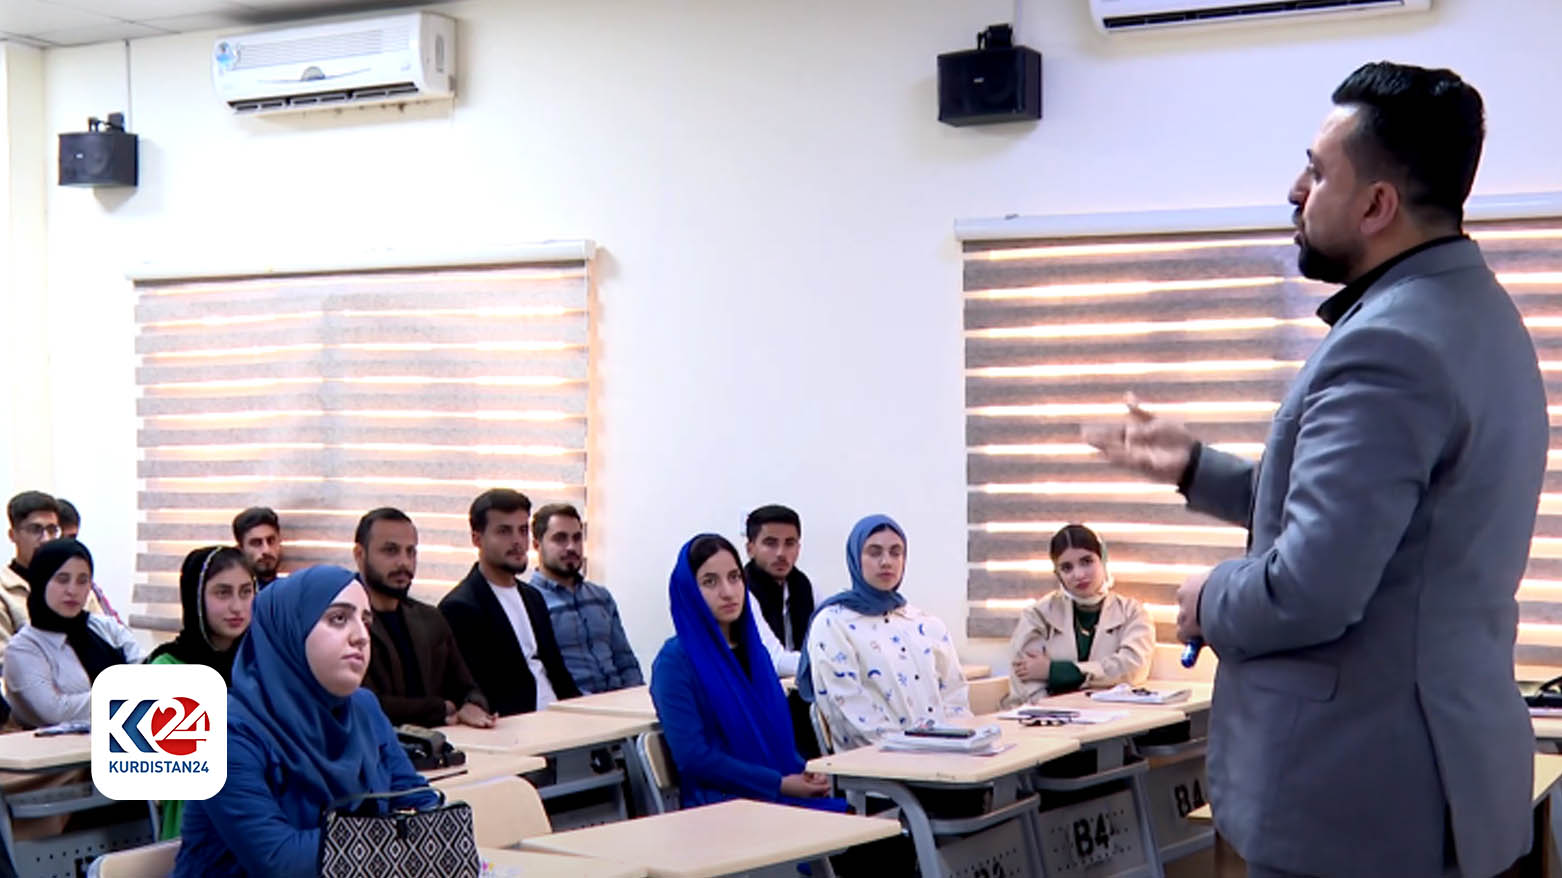 A university professor giving a lecture. (Photo: Kurdistan 24)